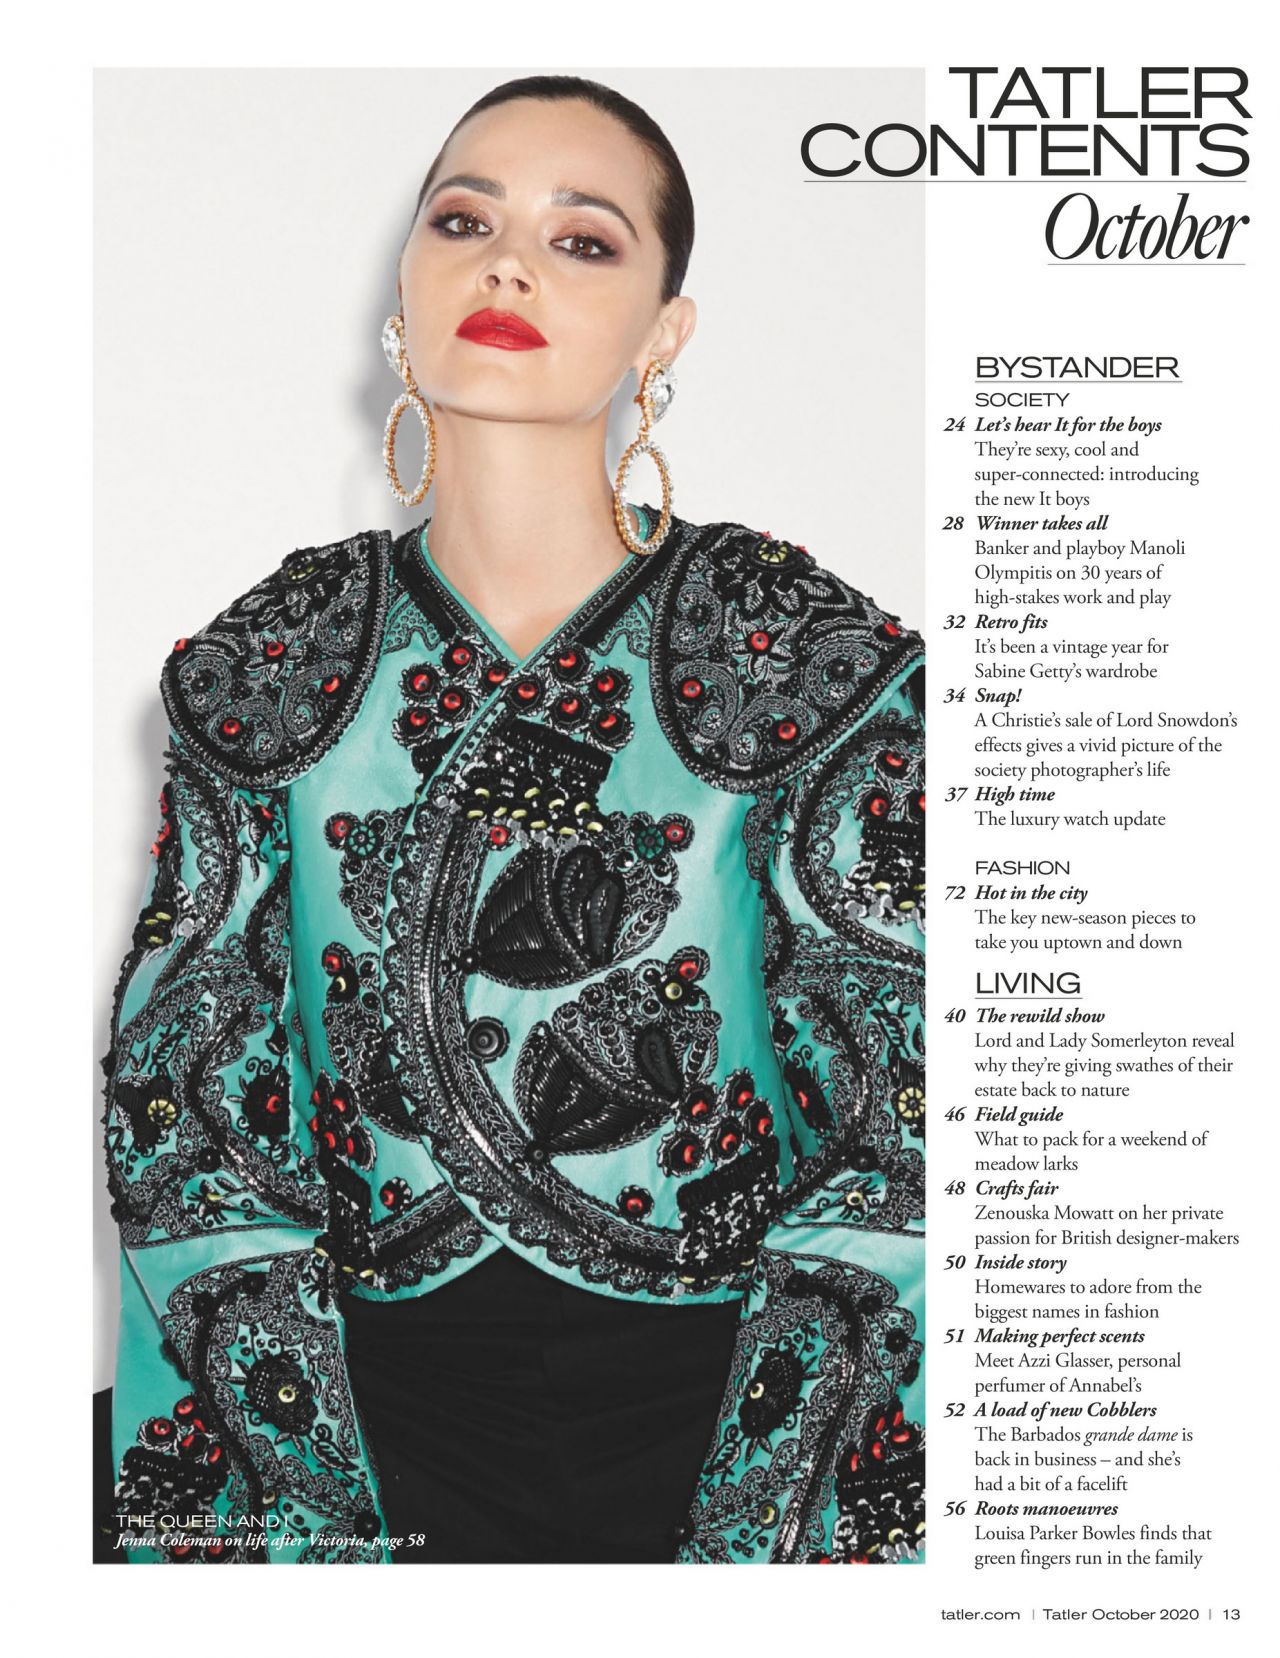 jenna-louise-coleman-tatler-magazine-october-2020-issue-1.jpg